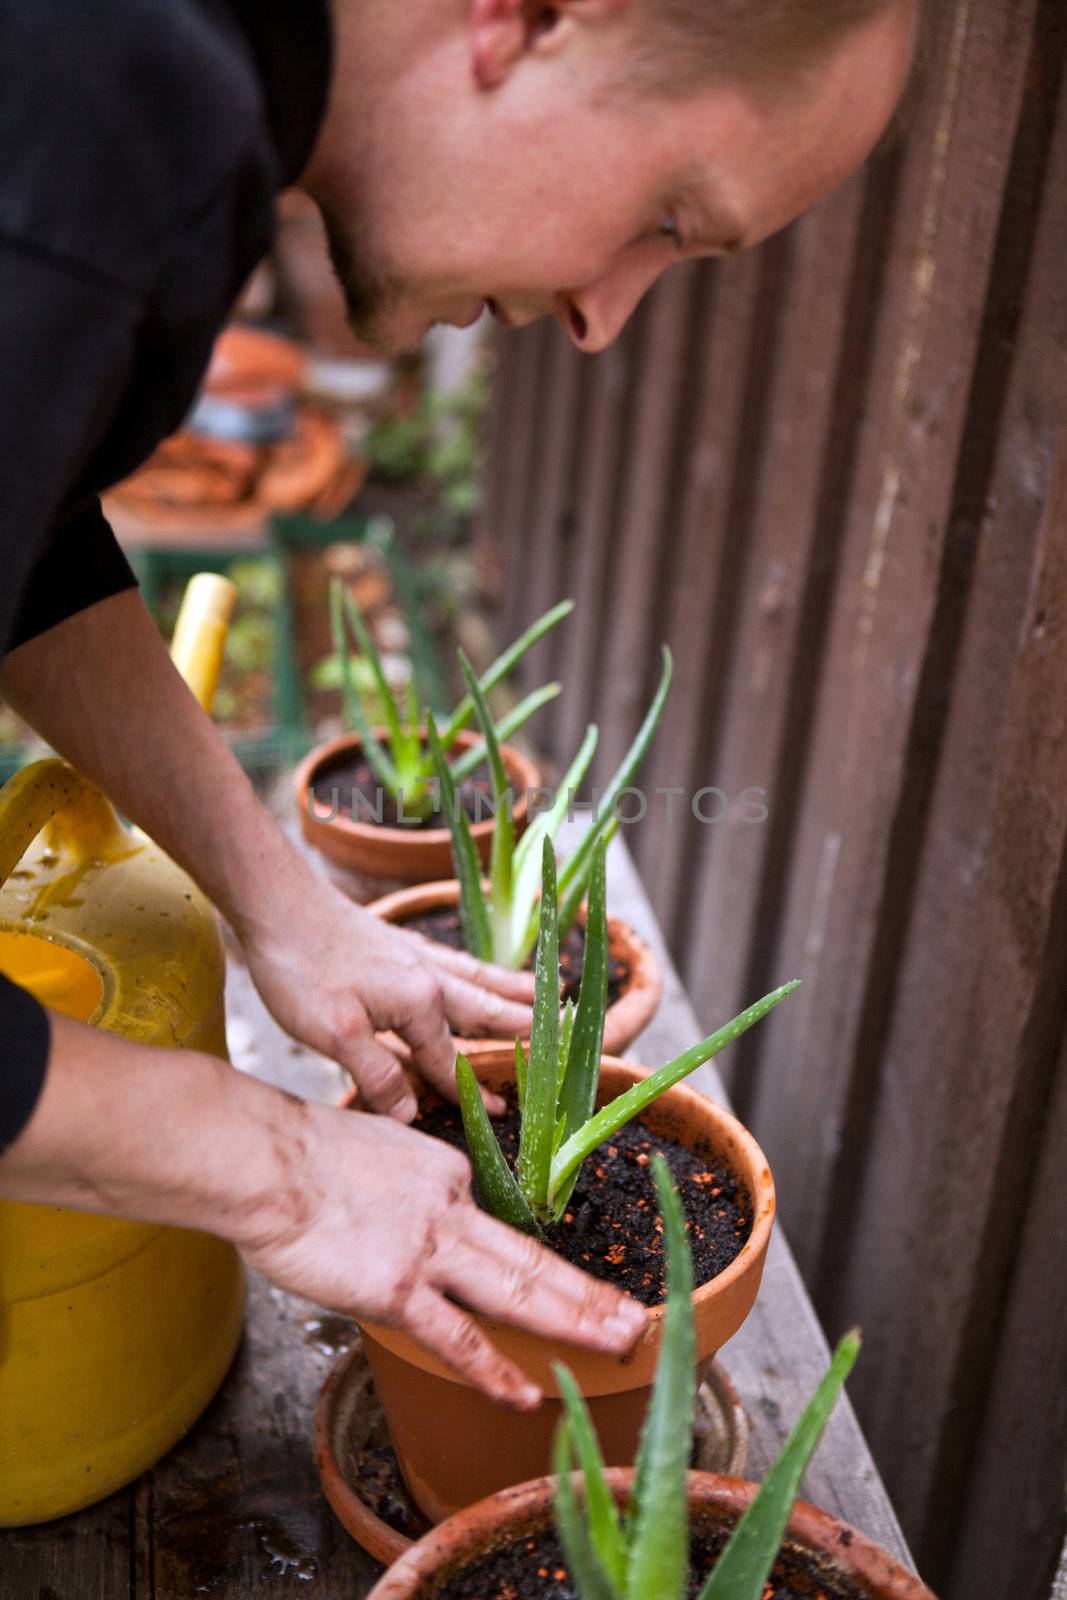 gardener repot young aloe vera plants in the garden